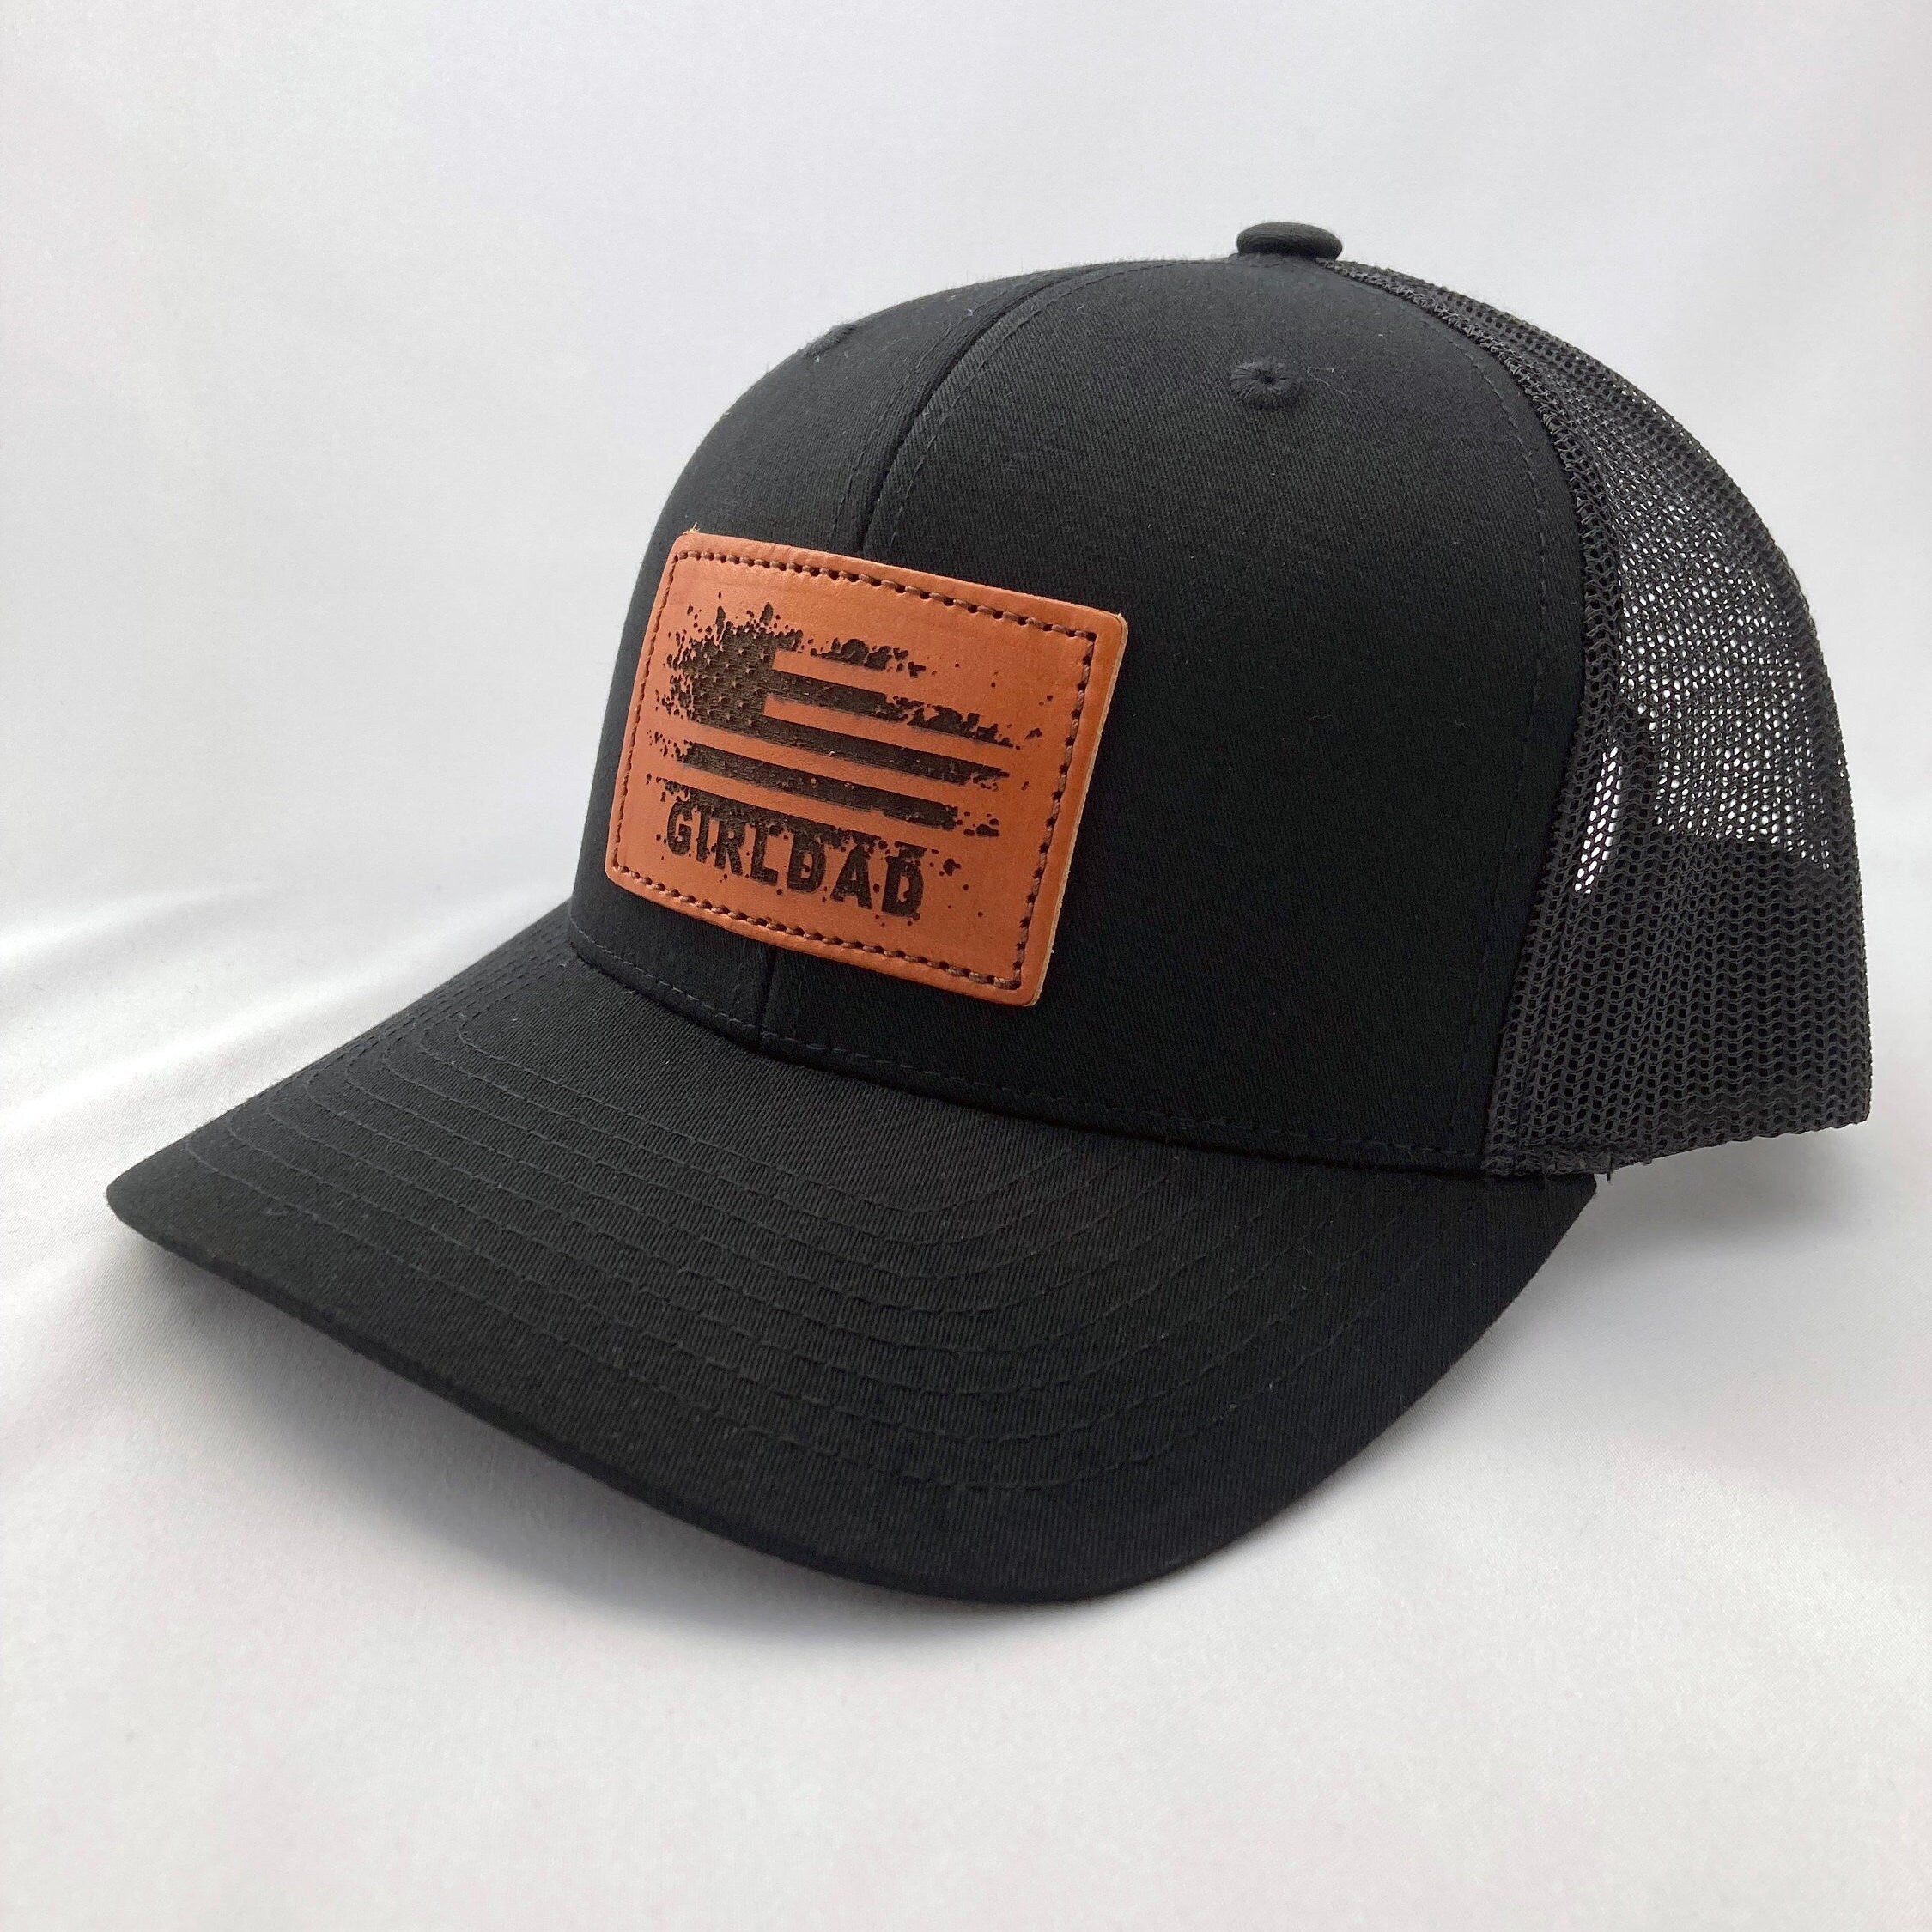 Girldad® Black/Black  USA Distressed Flag Teak Leather Patch Trucker Hat